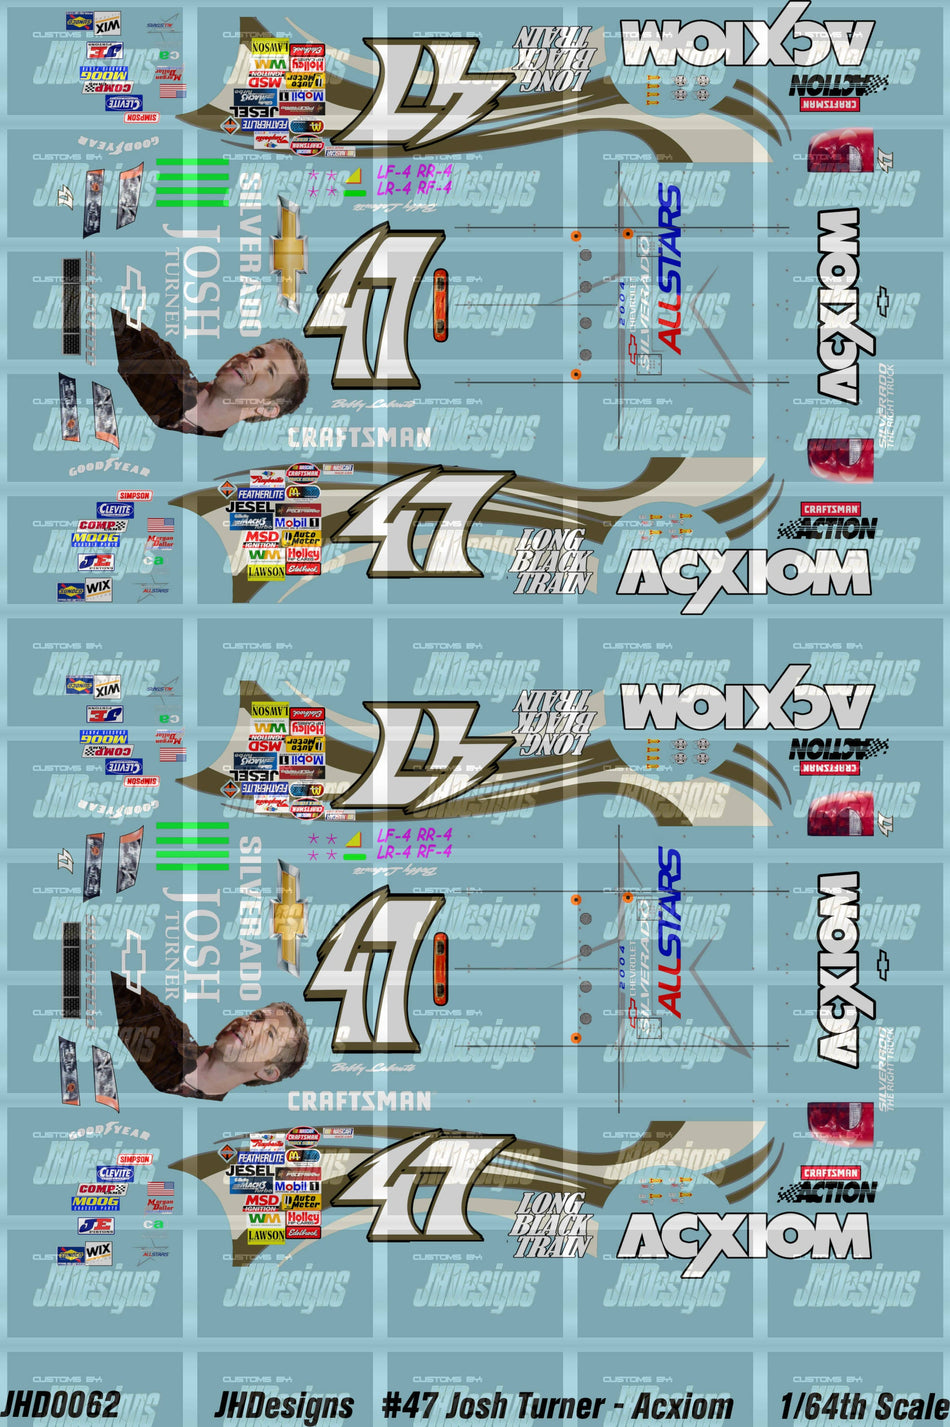 JH Designs Bobby Labonte 2004 CTS #47 Josh Turner - Acxiom 1:64 Racecar Decal Set